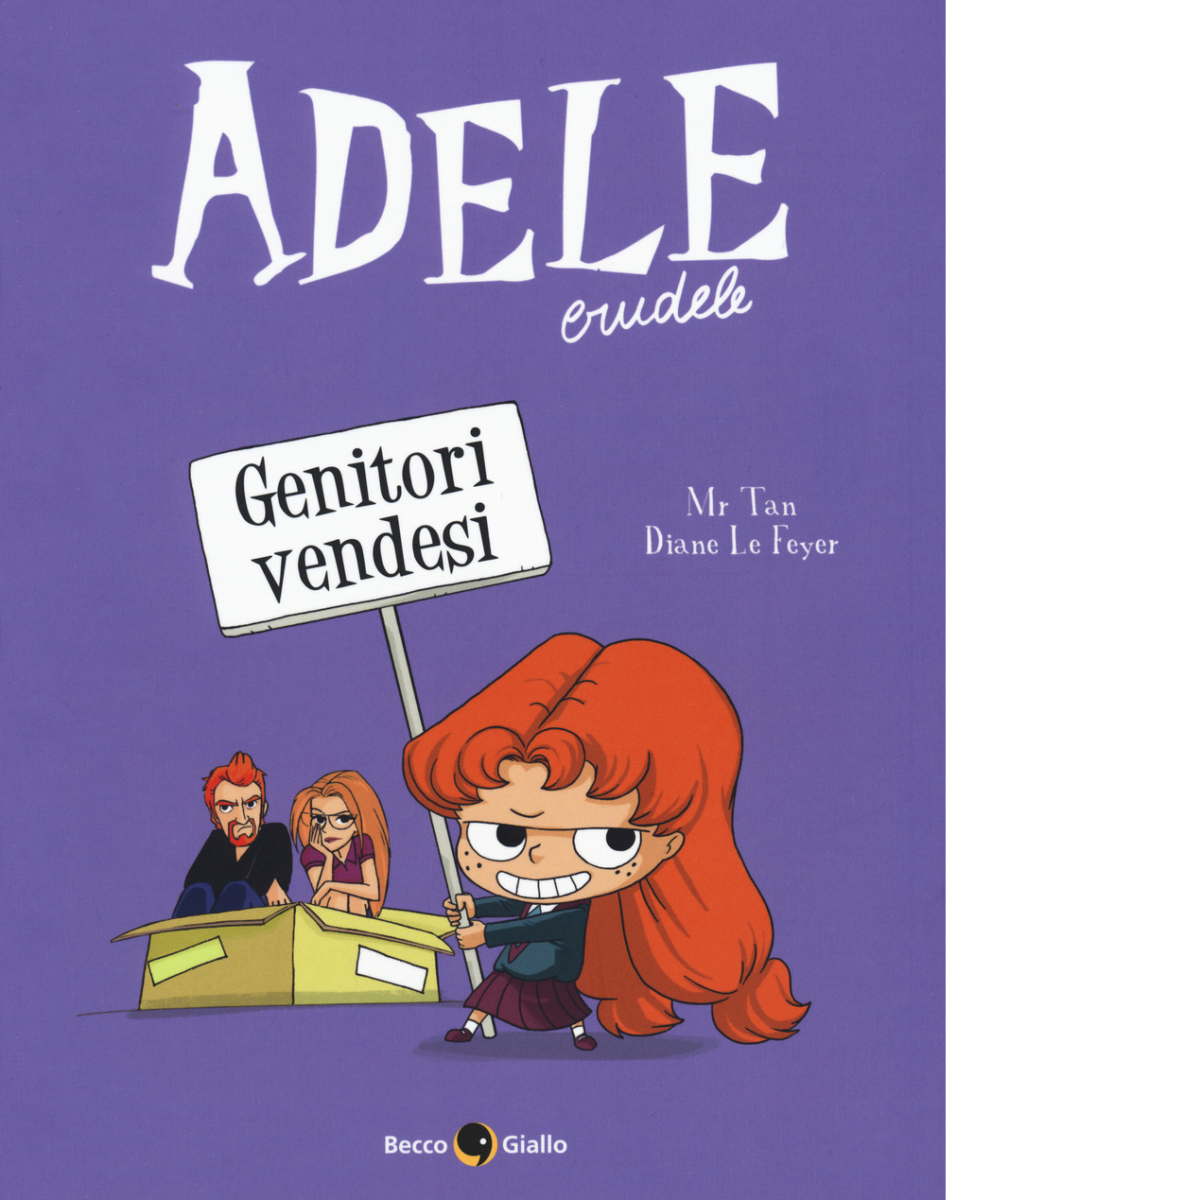 Adele crudele. Genitori vendesi (Vol. 8) di Mr Tan, Diane Le Feyer,  2020,  Becc